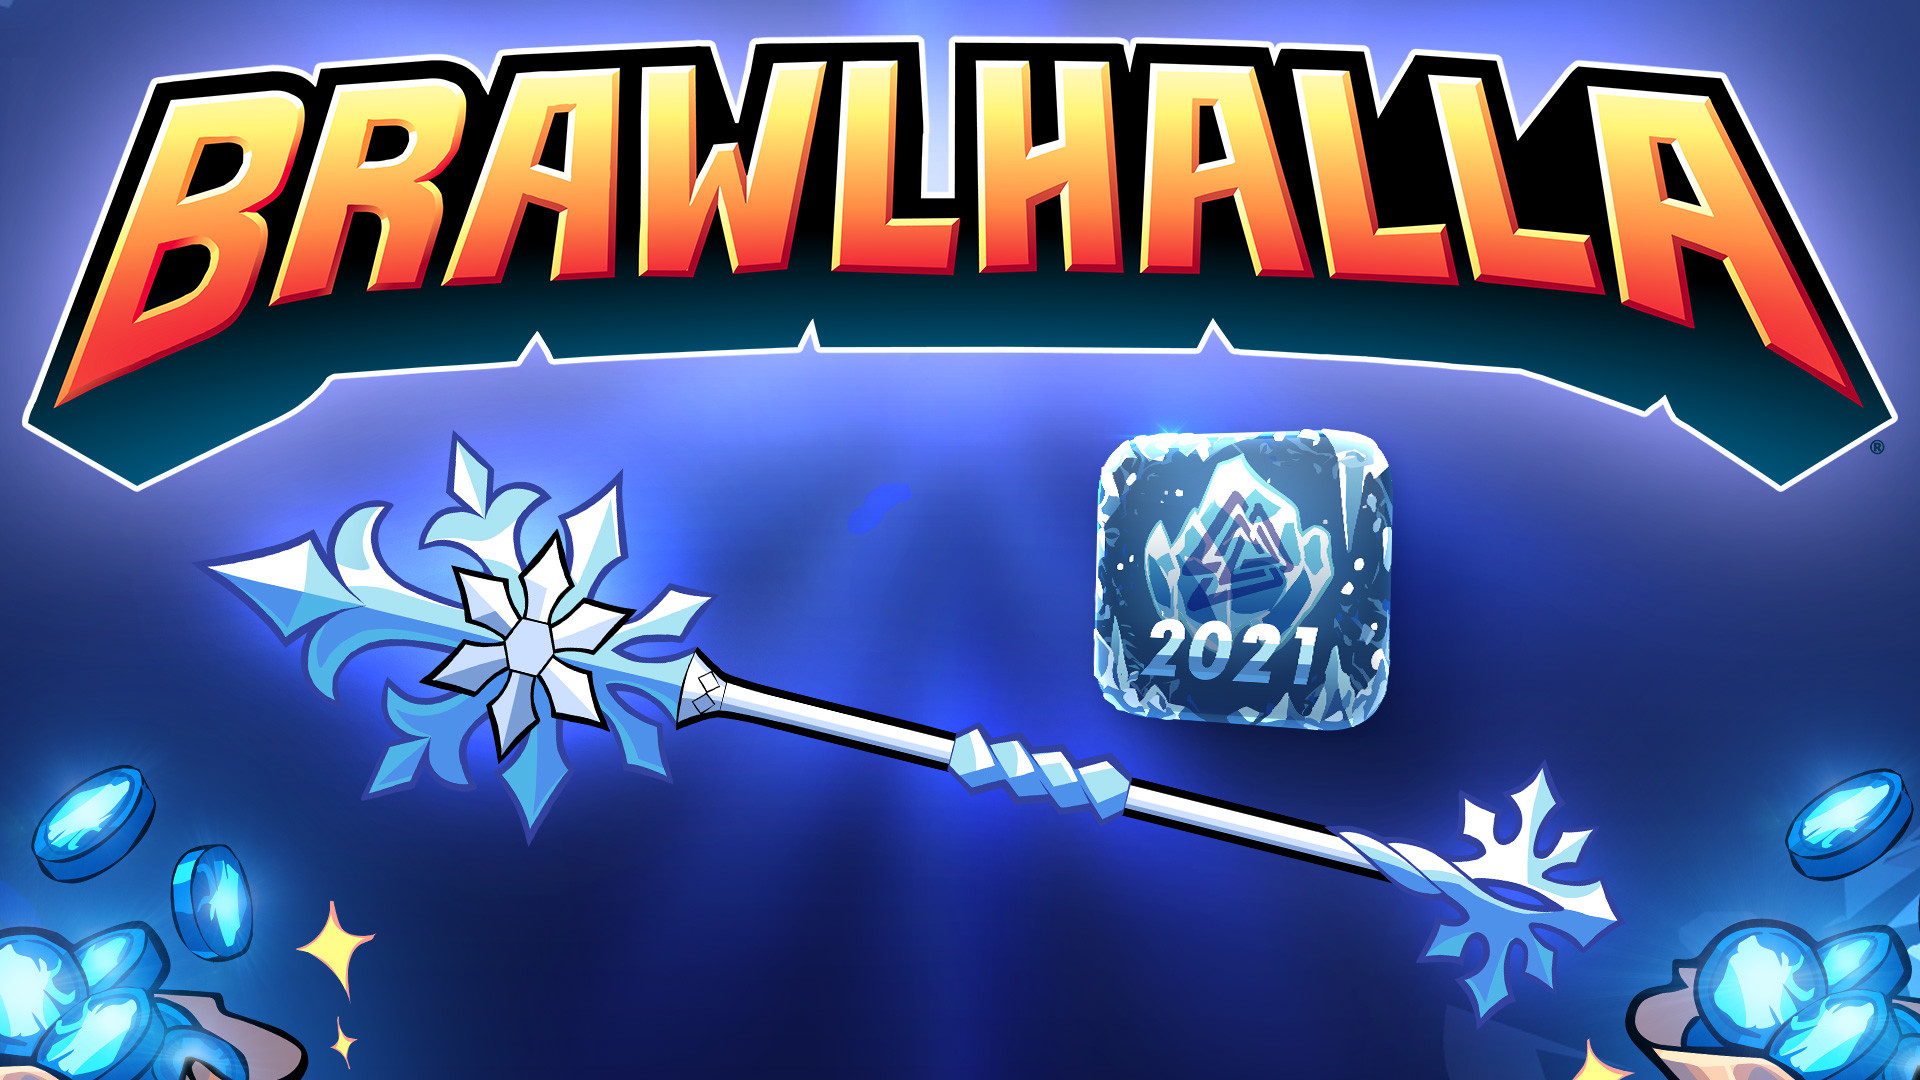 Brawlhalla Winter Championship 2021 Pack on Steam